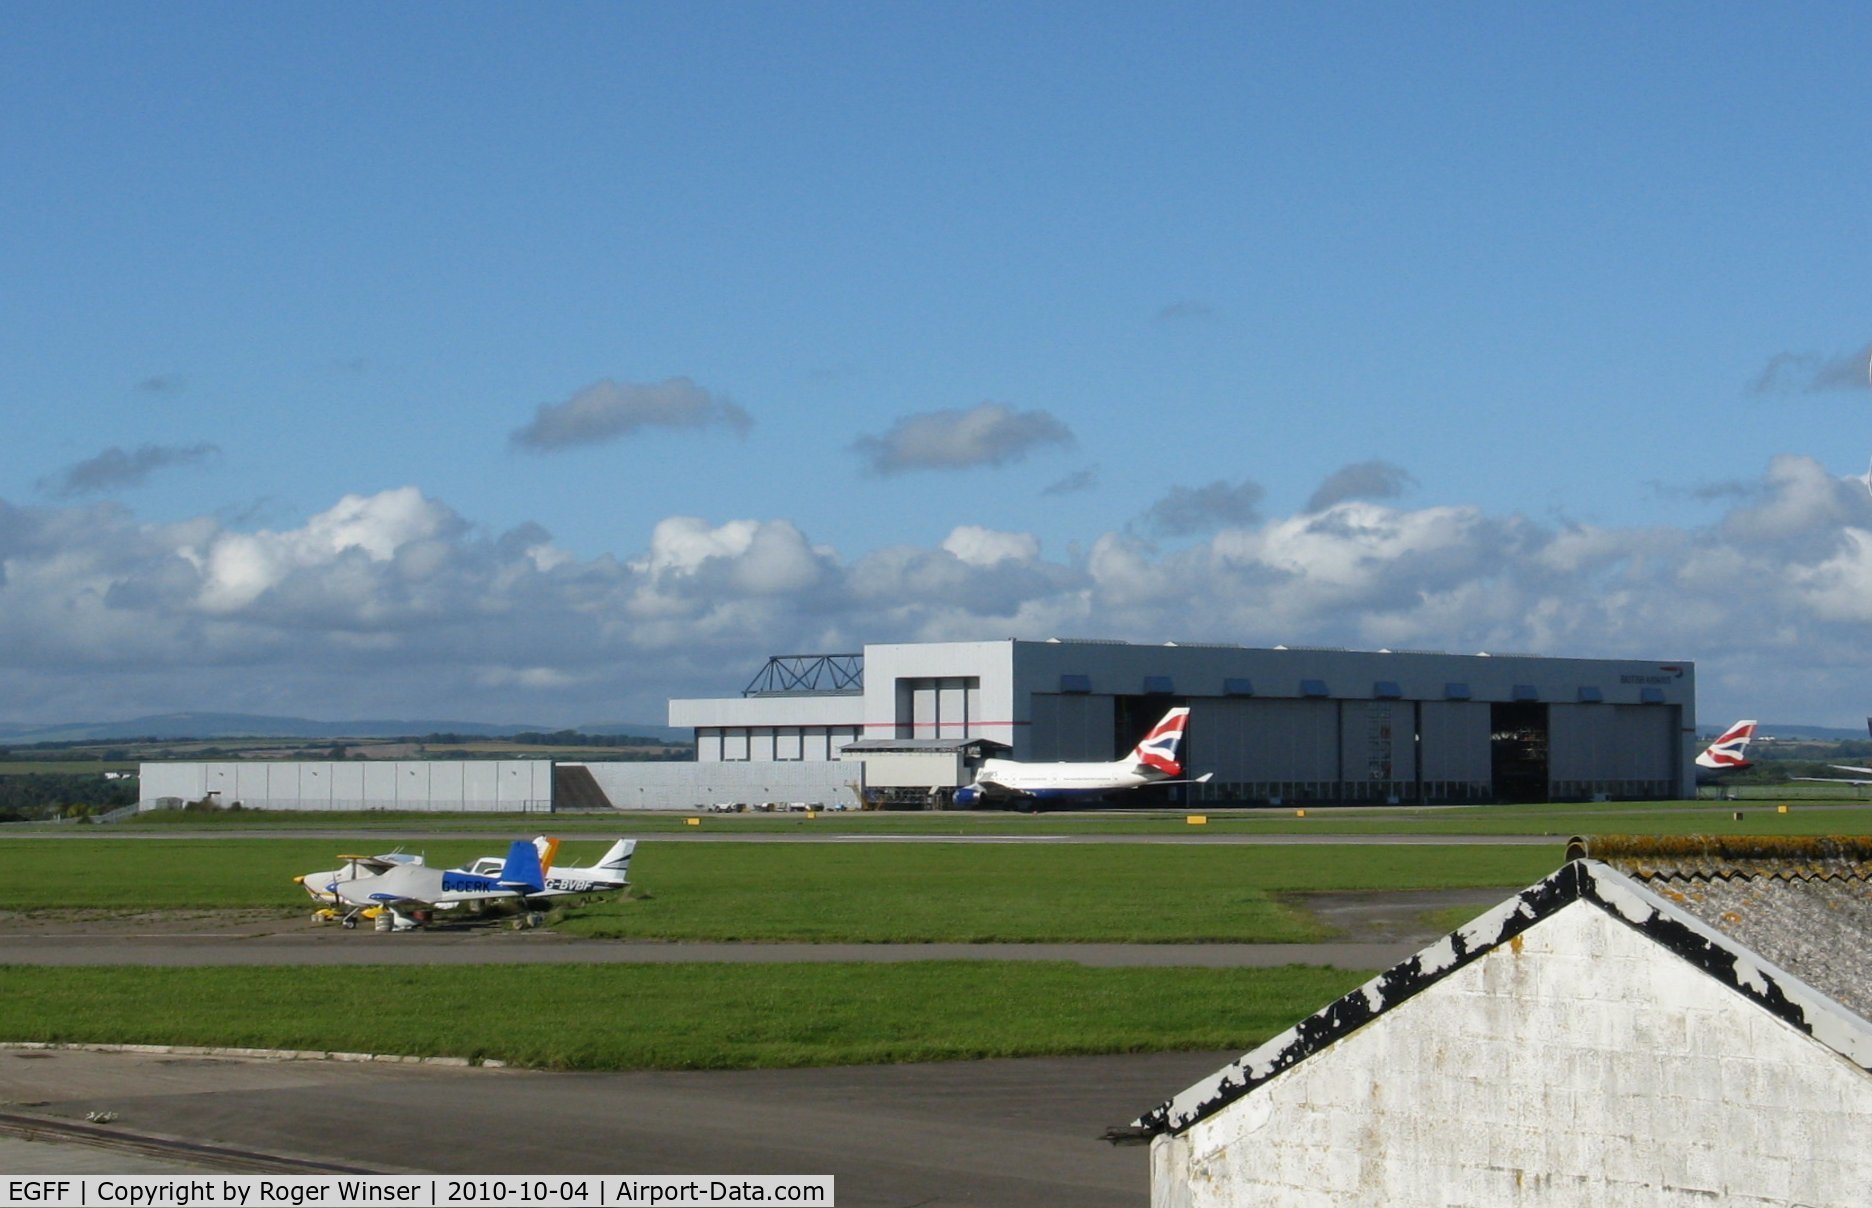 Cardiff International Airport, Cardiff, Wales United Kingdom (EGFF) - View towards BAMC hangar.